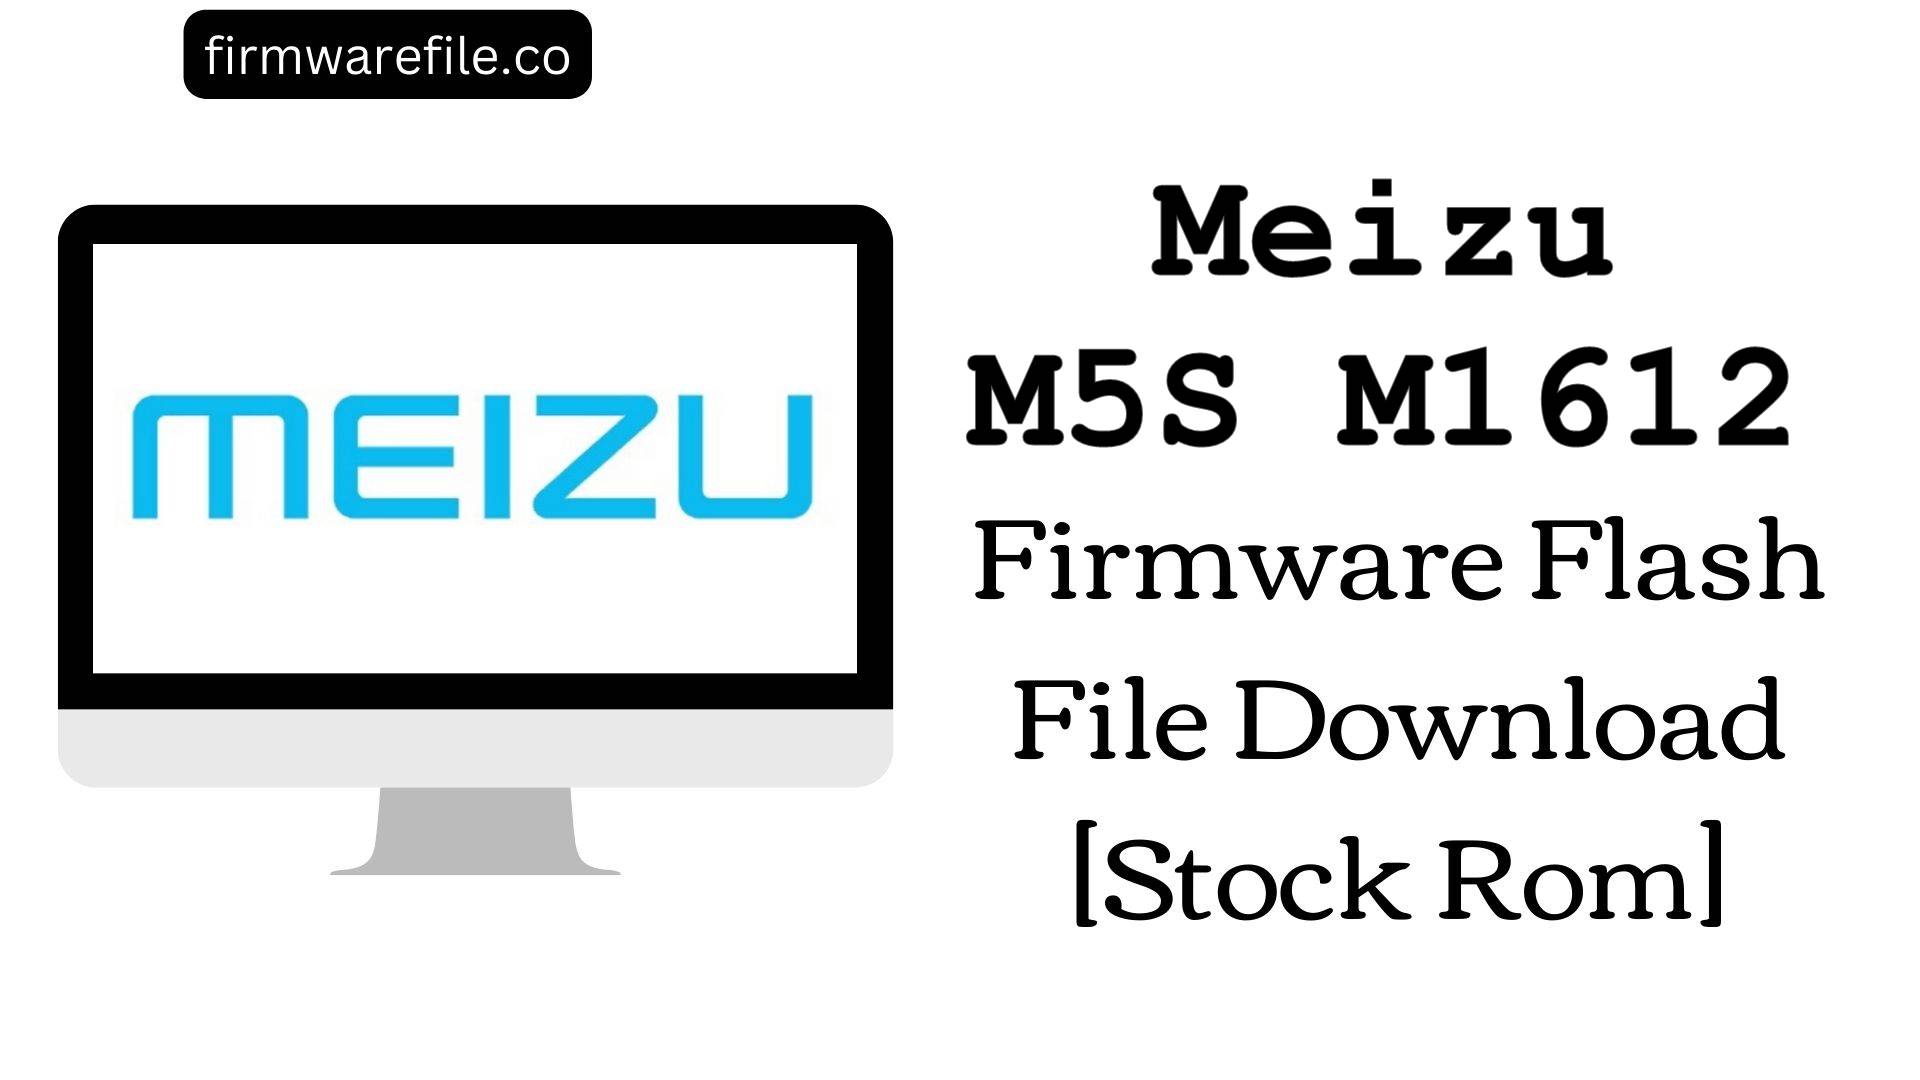 Meizu M5S M1612